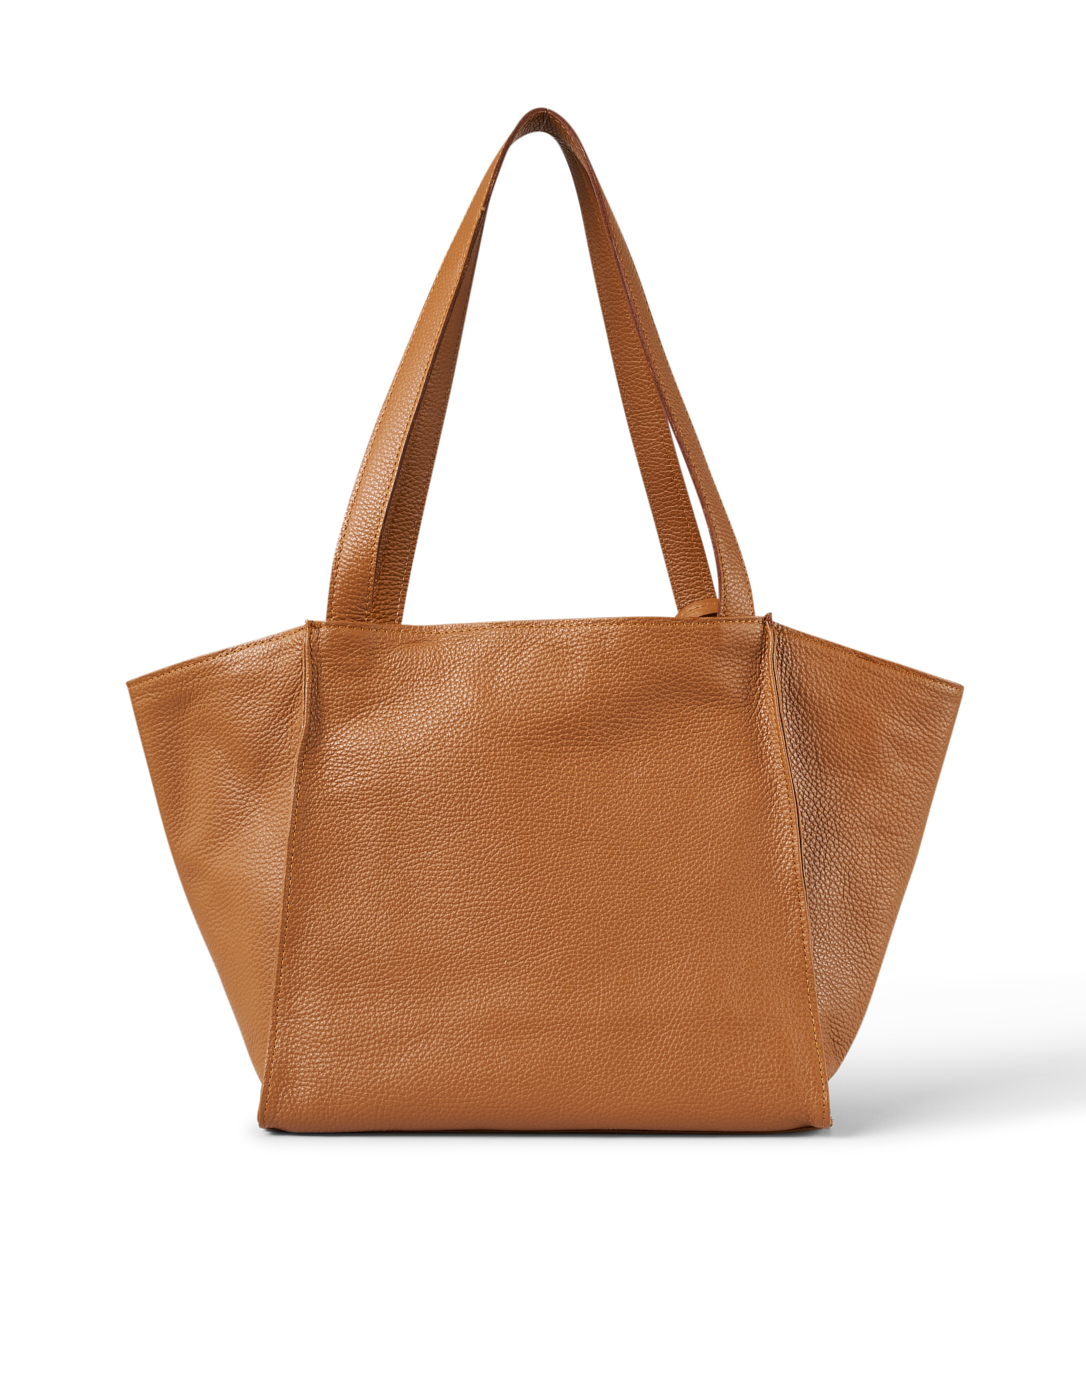 Kai Brown Woven Leather Tote Bag